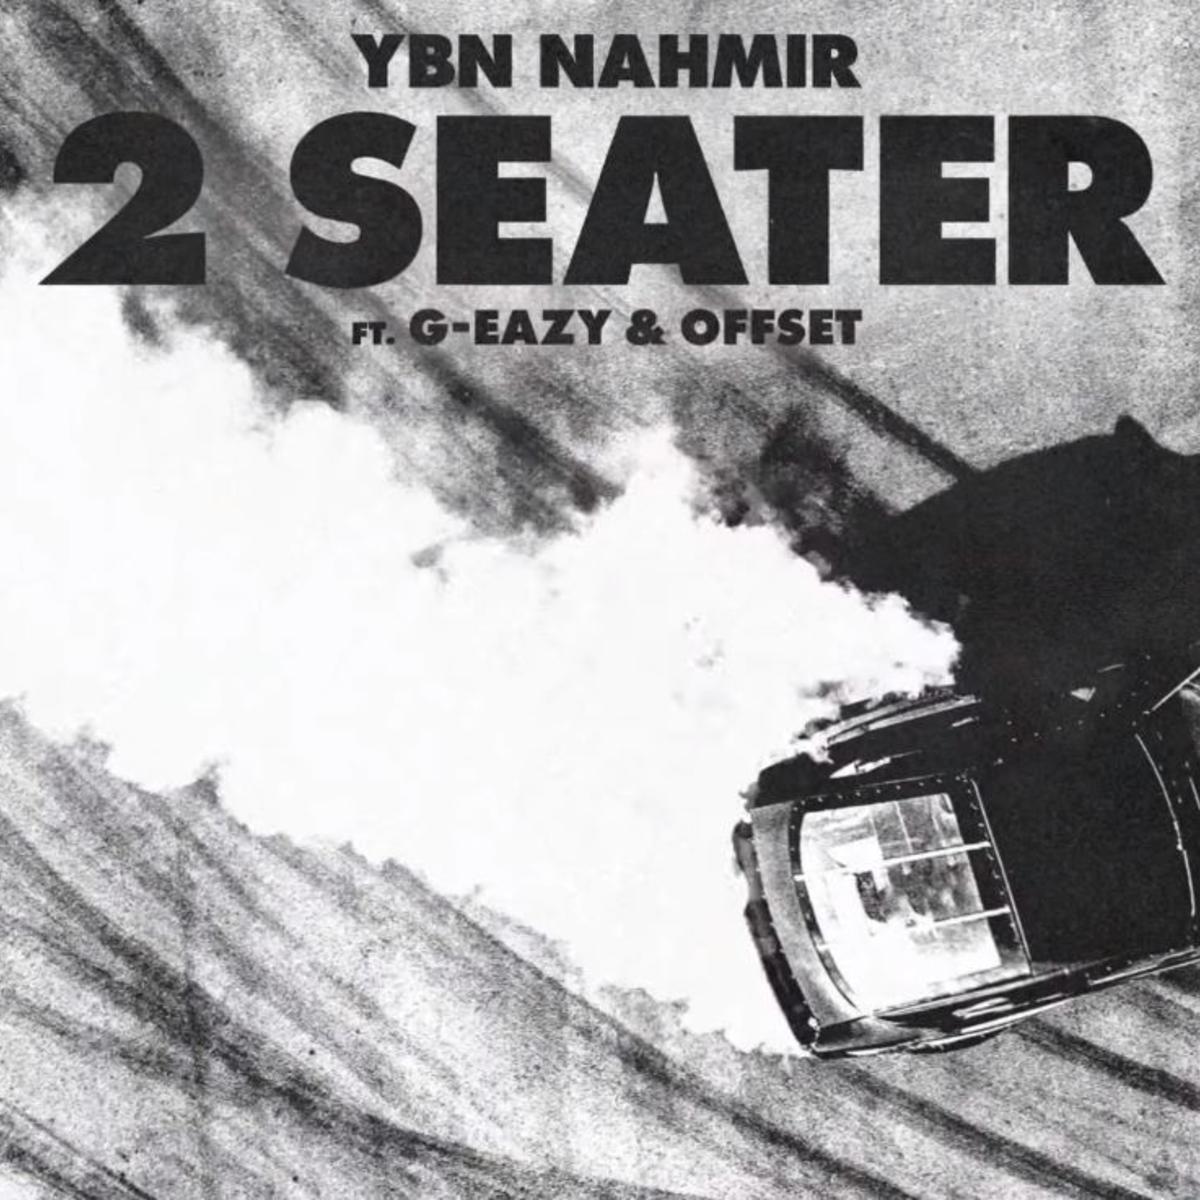 YBN Nahmir Calls On G-Eazy & Offset For “2 Seater”